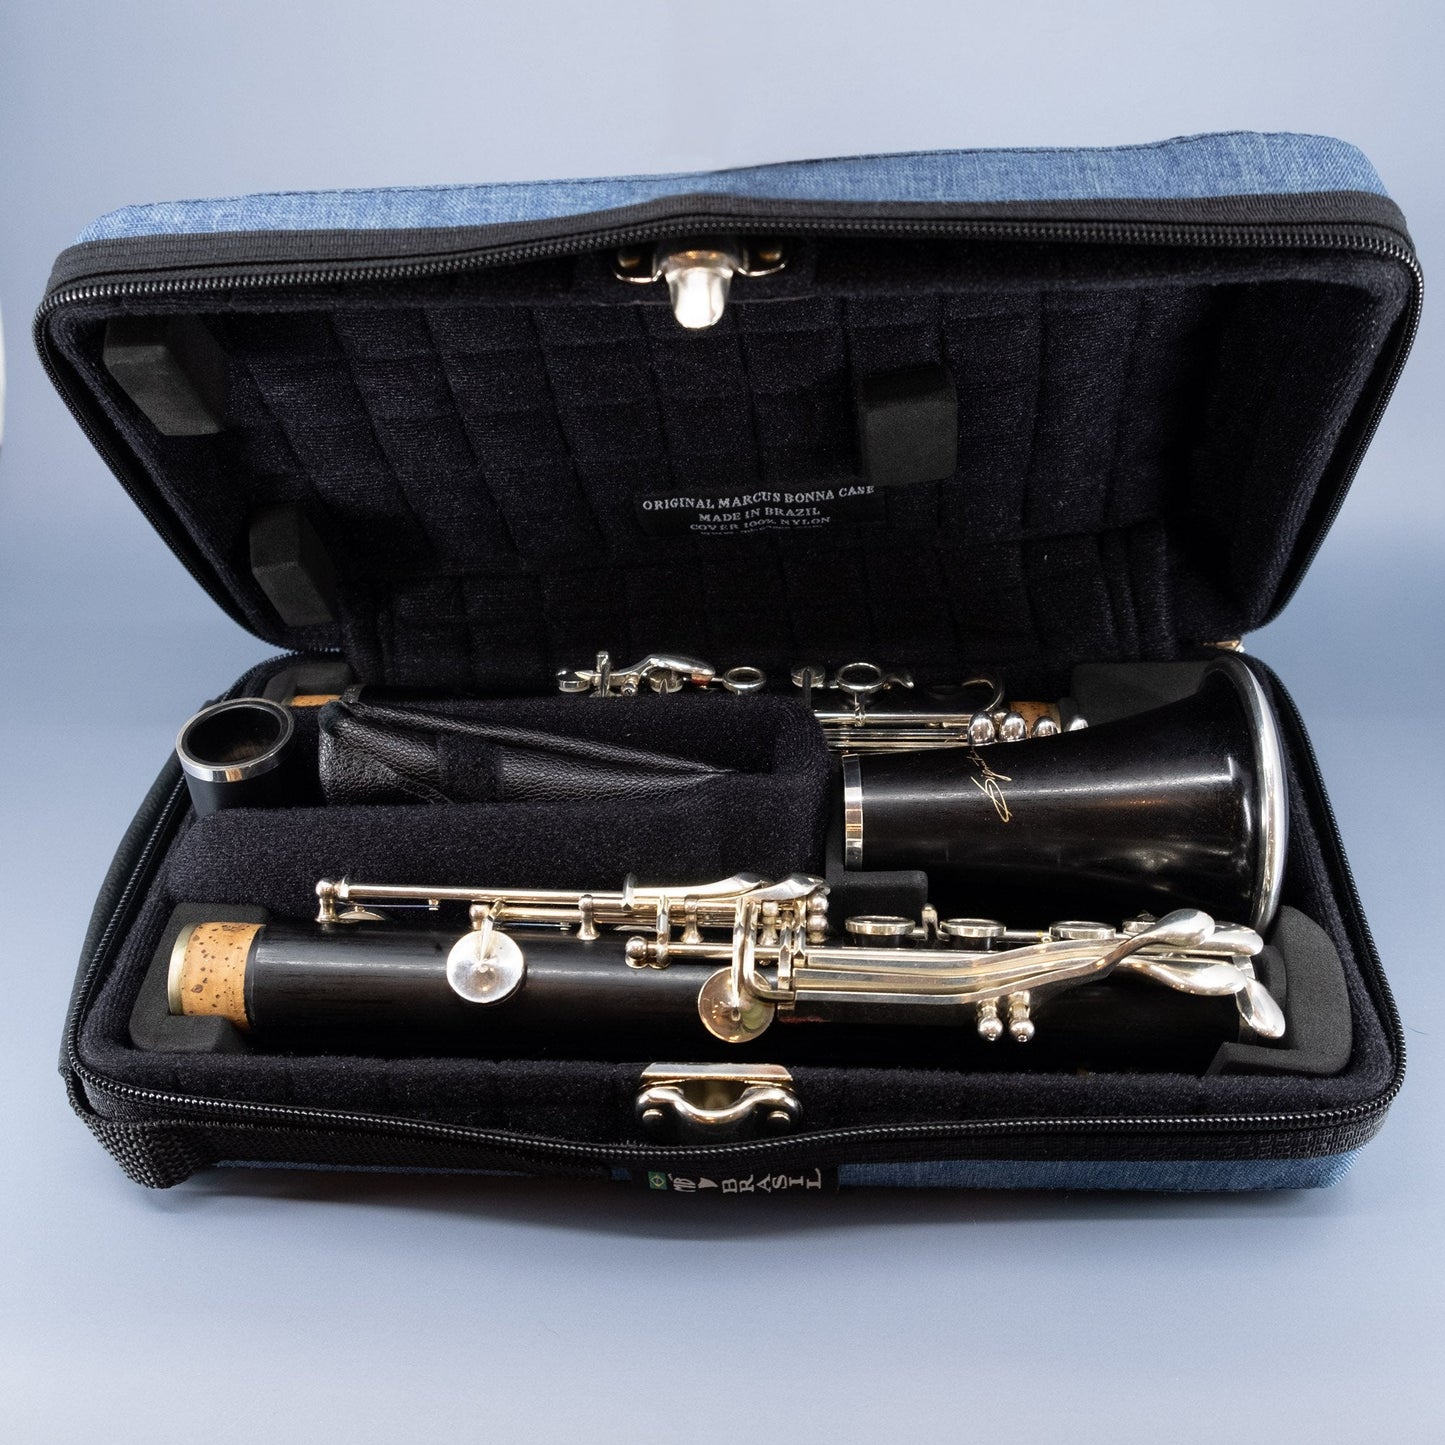 Marcus Bonna Ultra-Compact Bb Clarinet Case [earspasm edition]